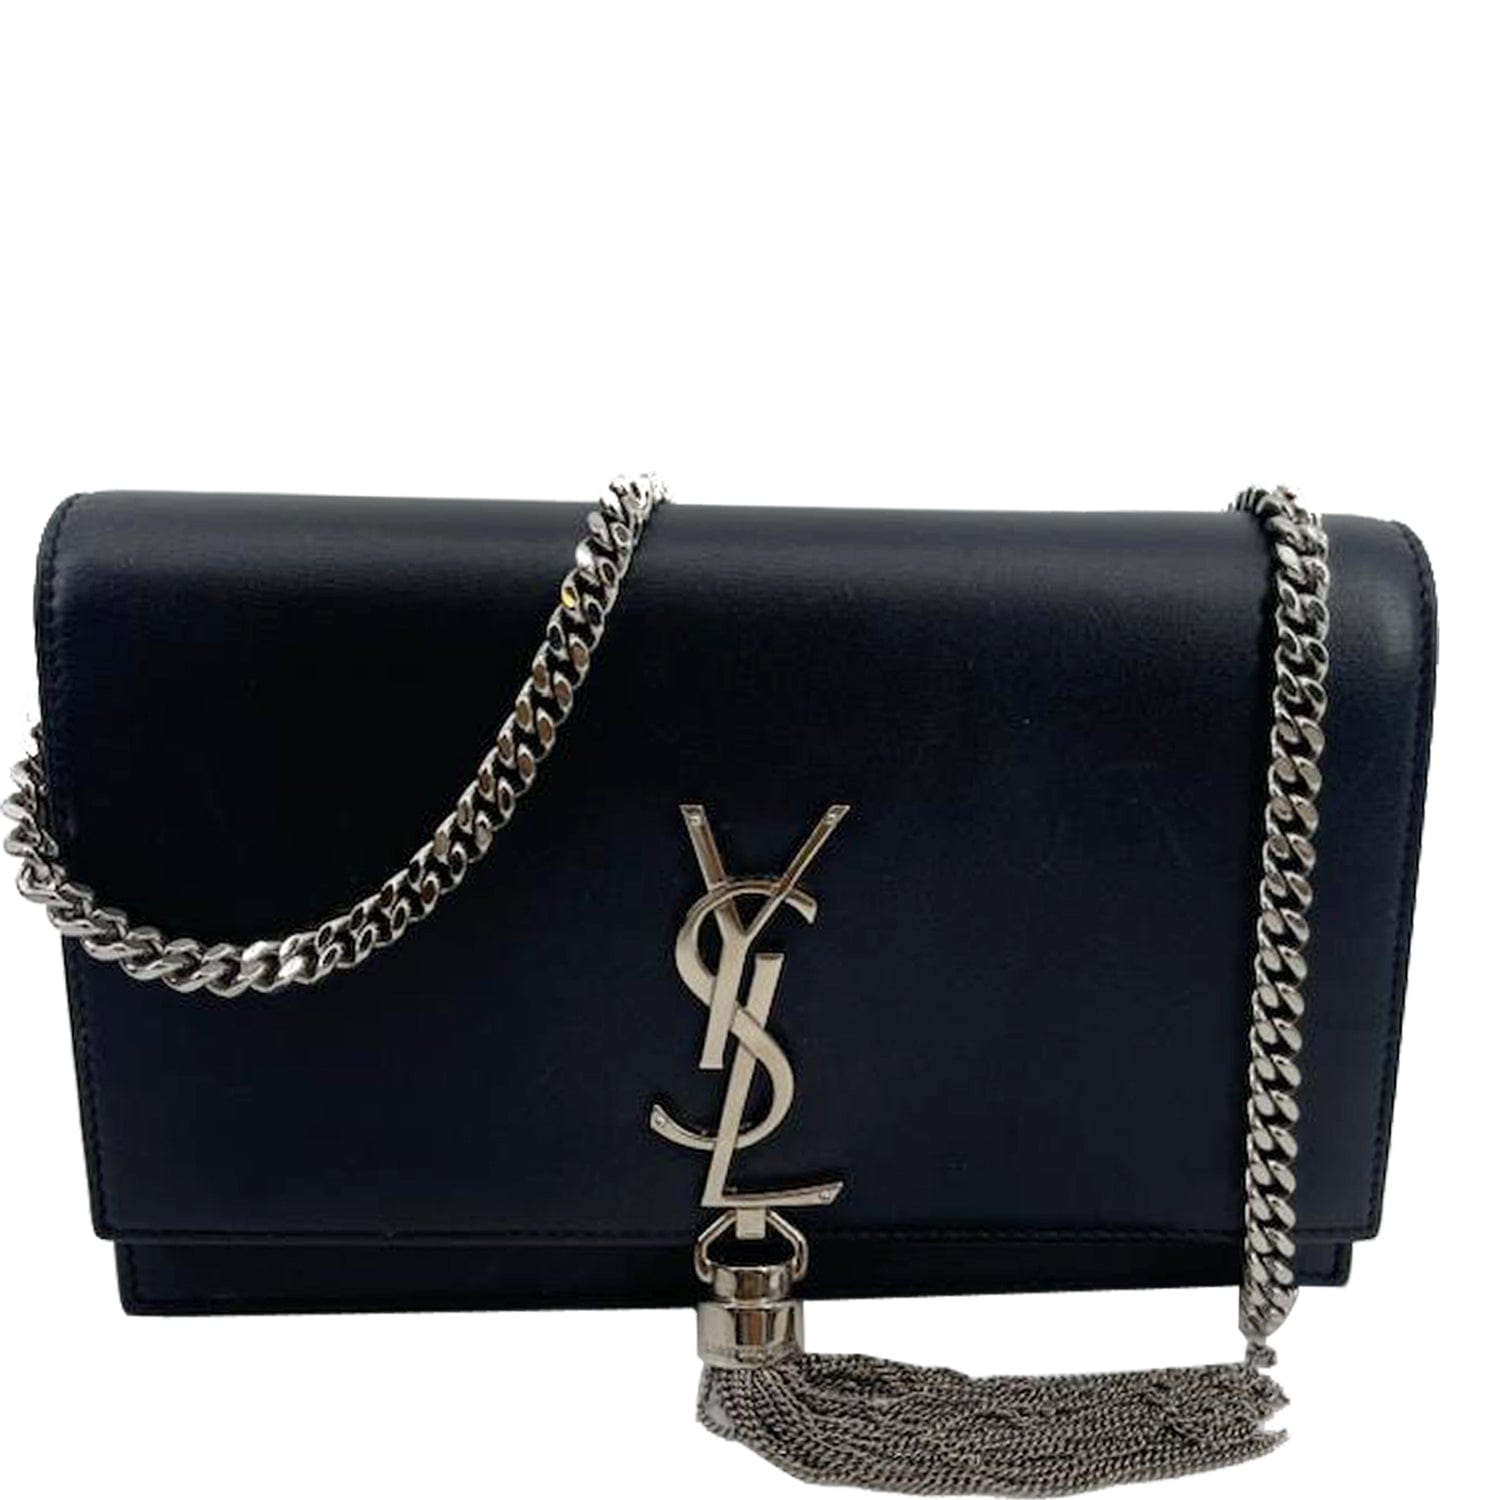 Brand New Saint Laurent Kate Medium Chain Bag / Black Leather / Silver YSL